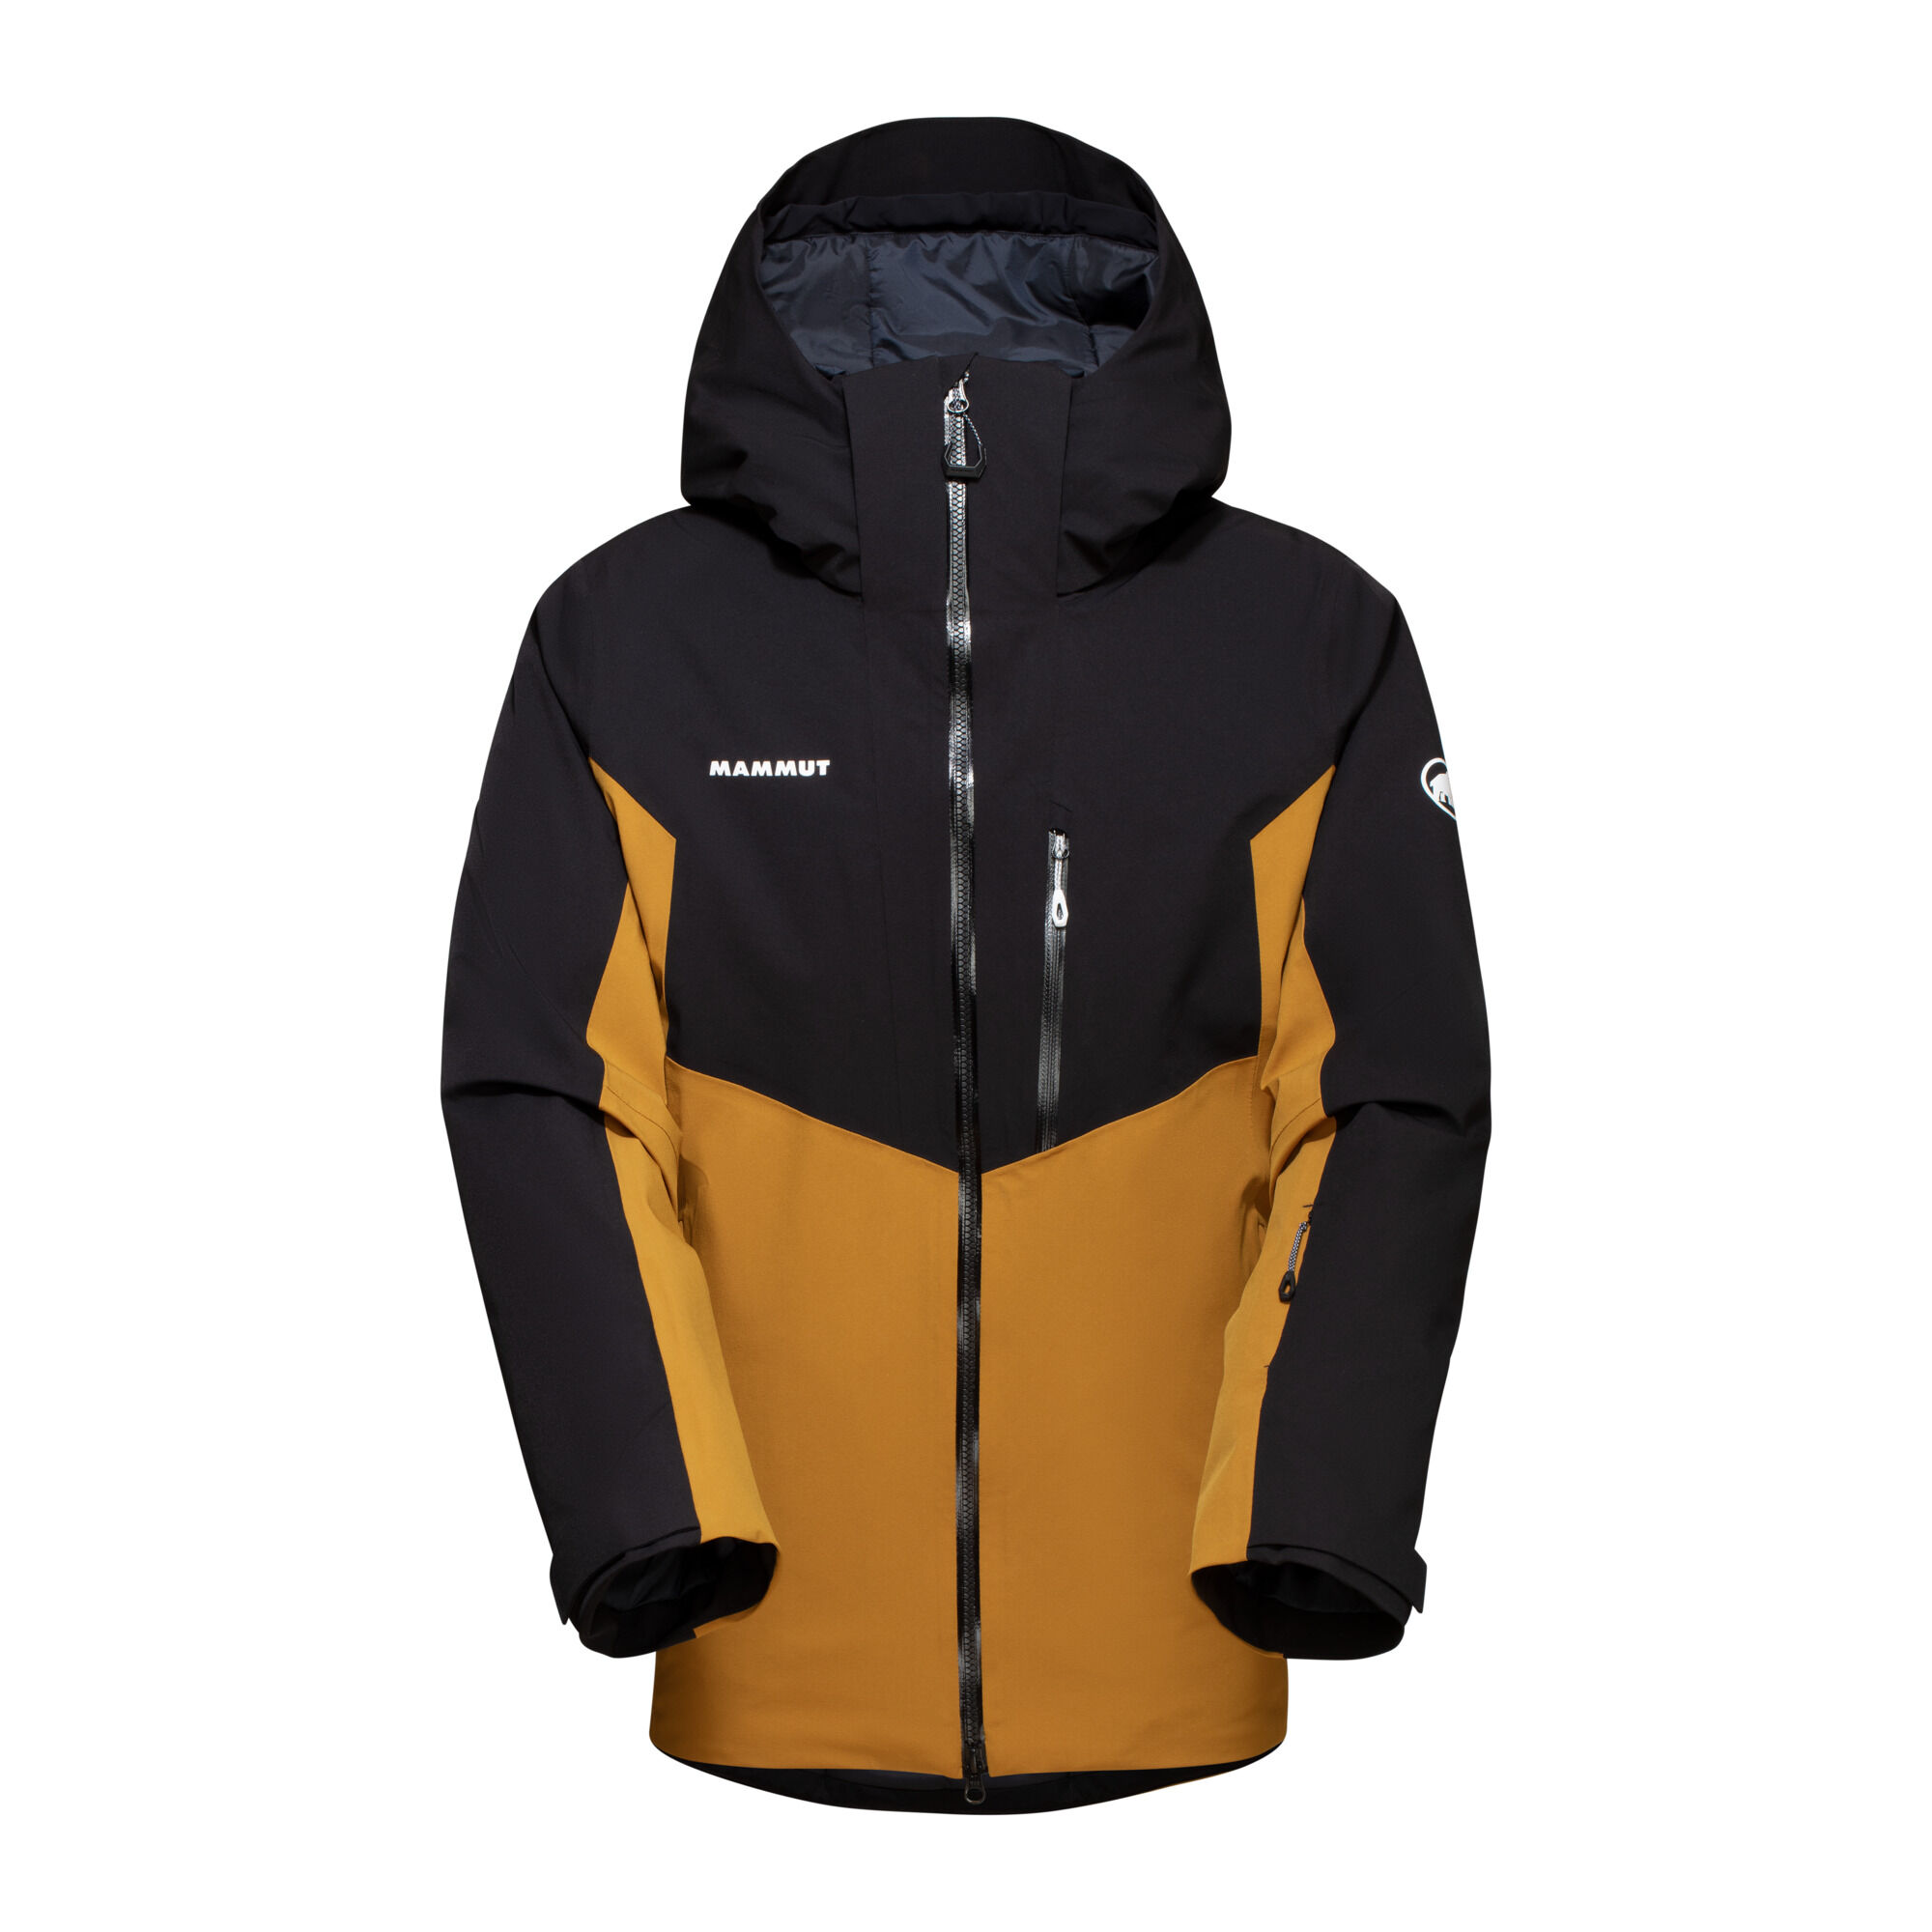 Mammut Stoney HS Thermo Jacket - Ski jacket - Men's